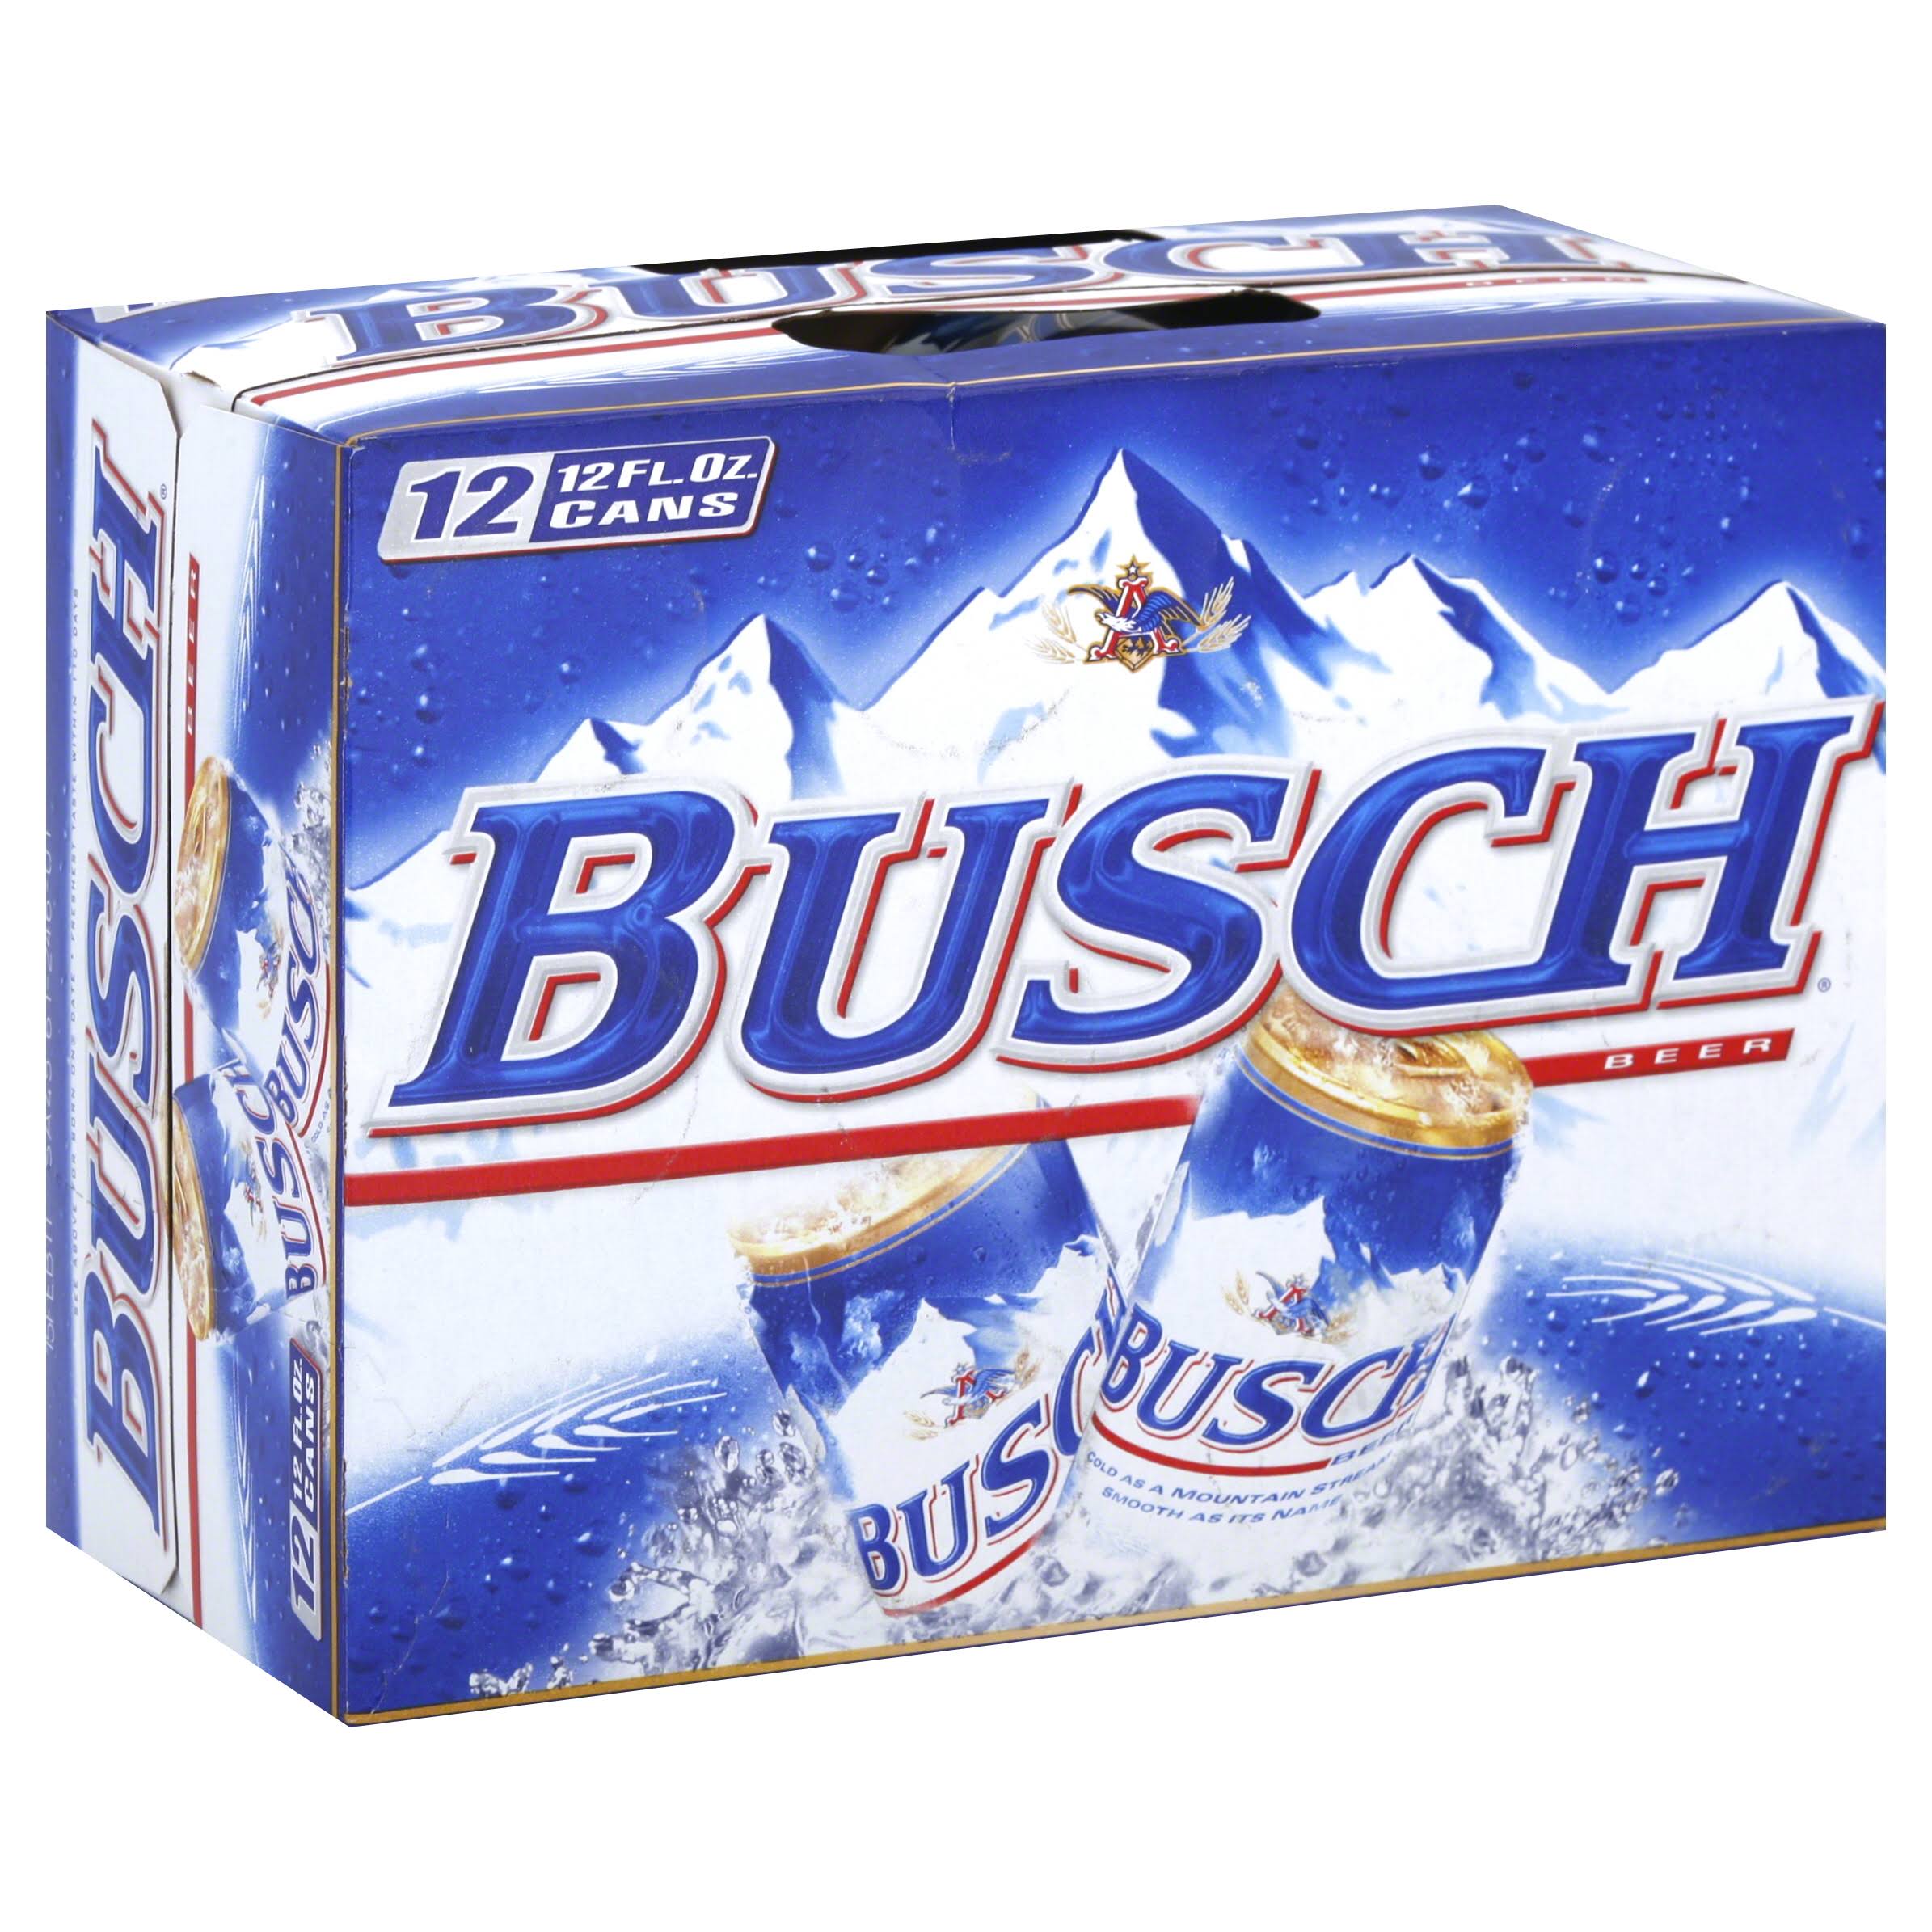 Busch Beer - 12 pack, 12 fl oz cans